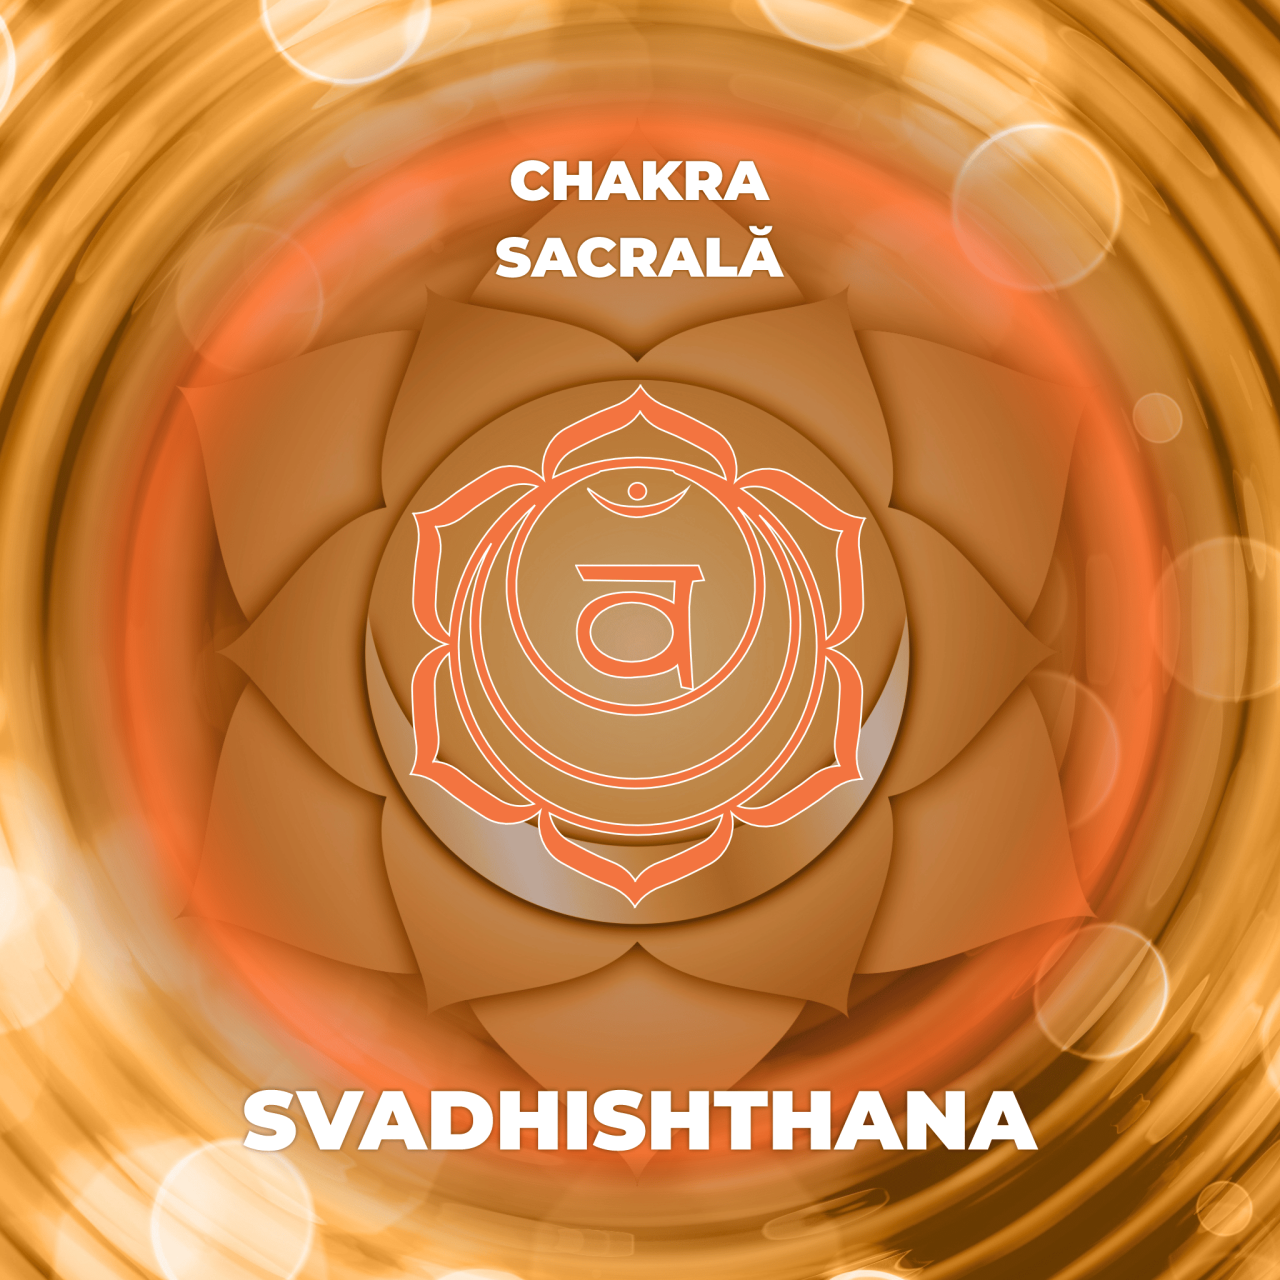 Chakra sacrală sau Svadhisthana totul despre chakra nr